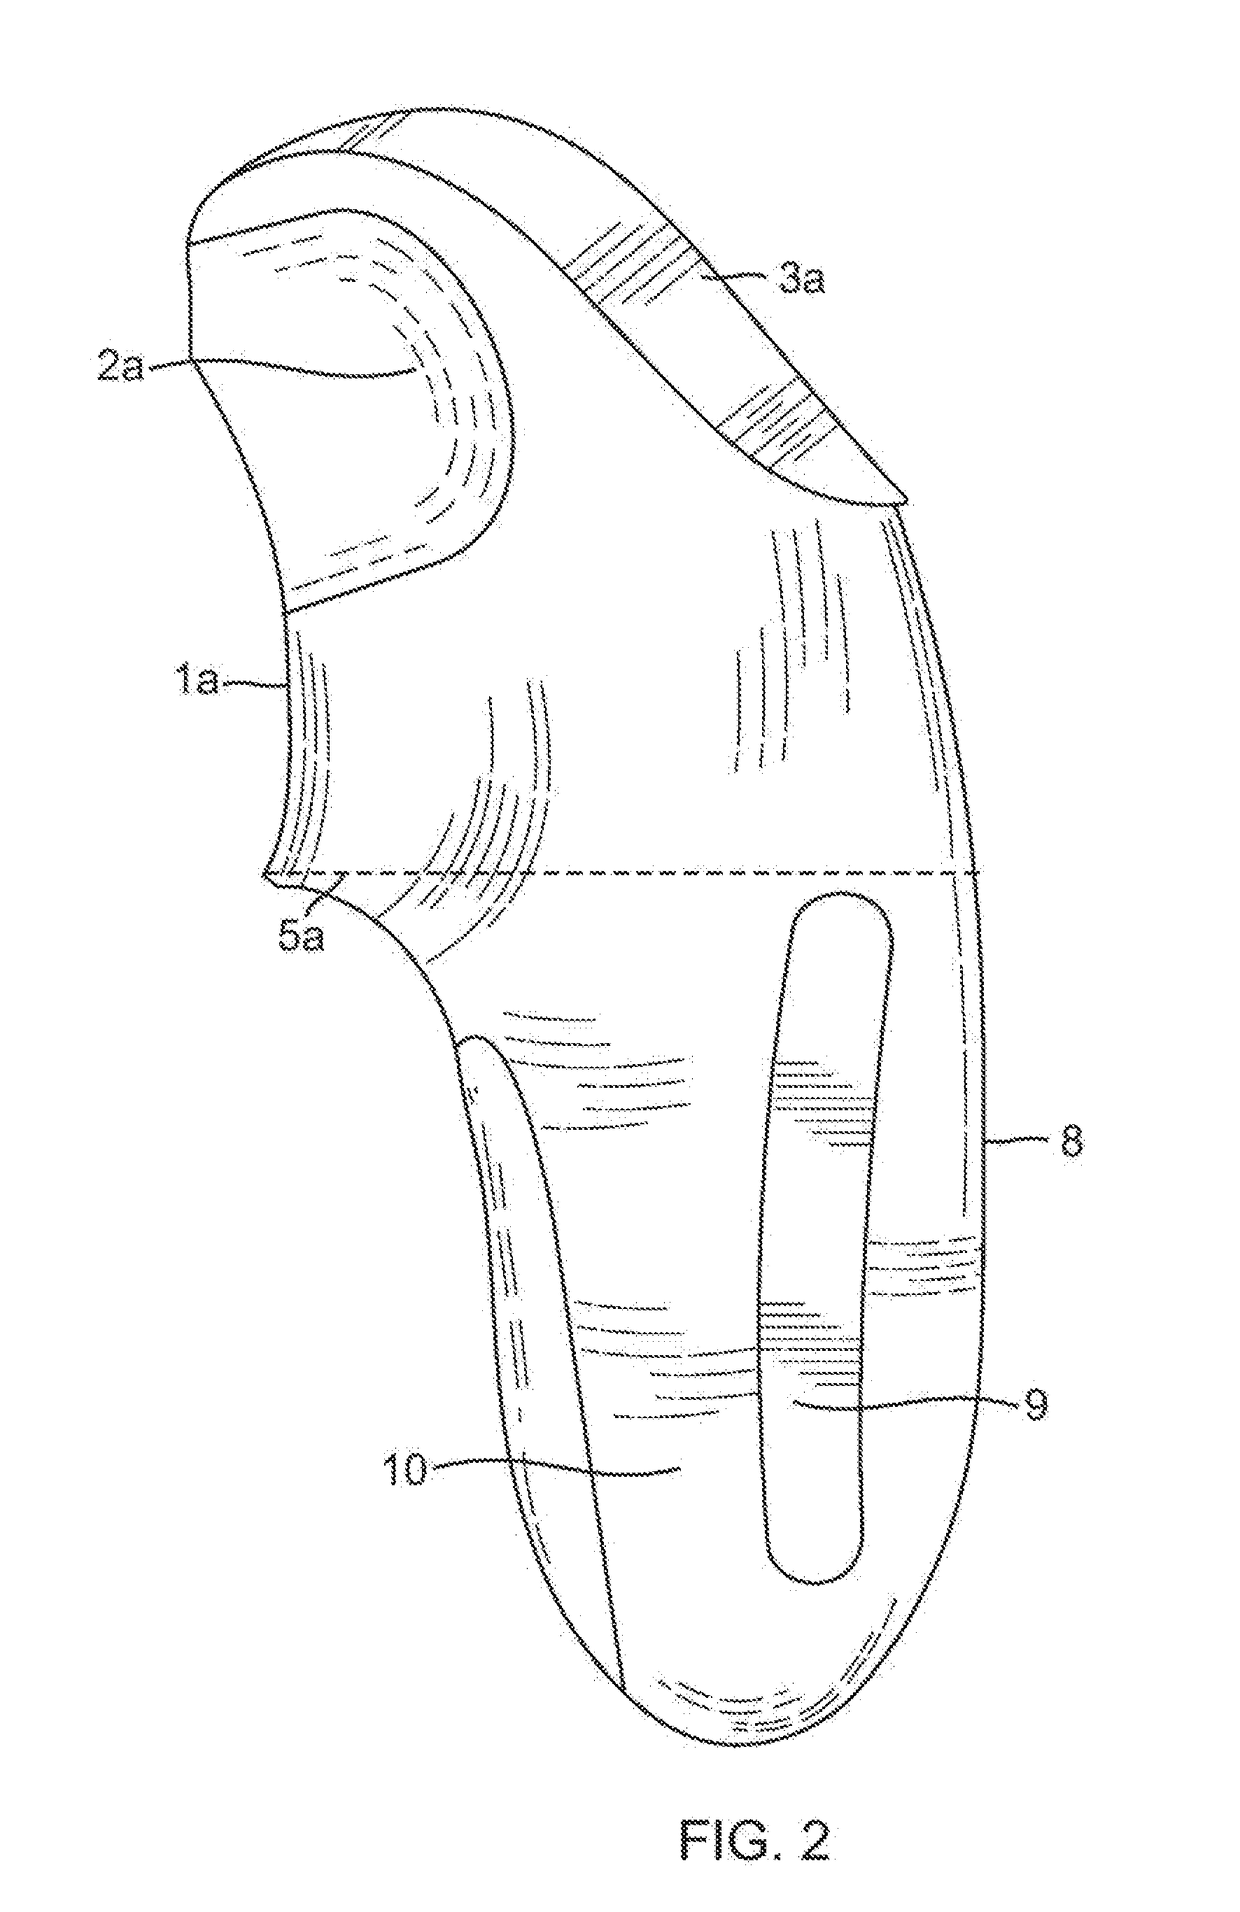 Method of manufacturing prosthetic socket interface